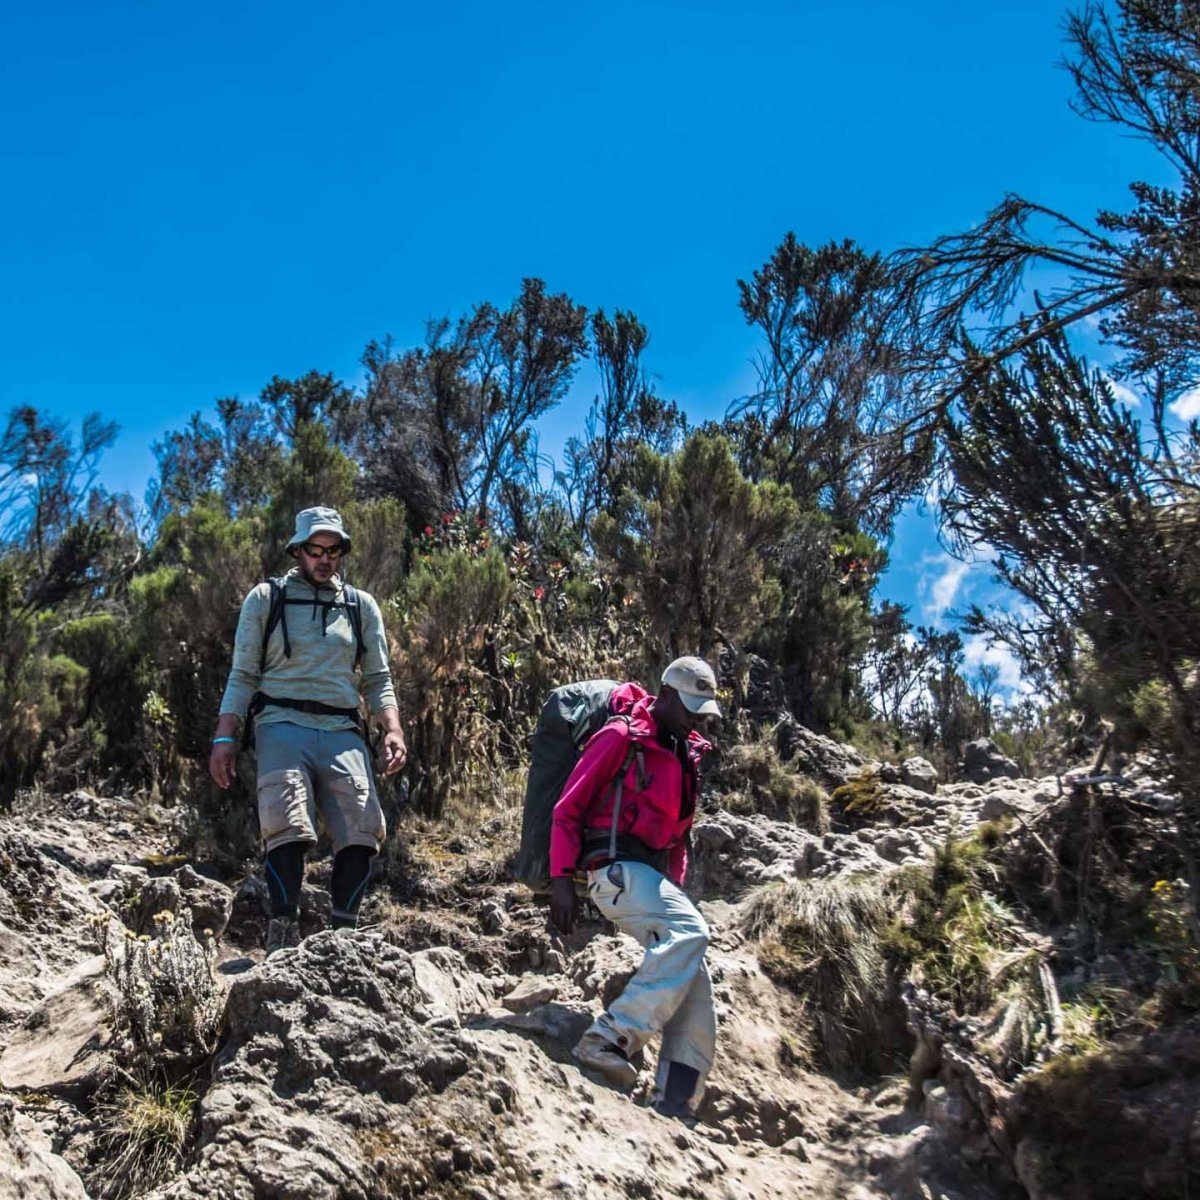 Two trekkers hiking downhill on rough terrain on Kilimanjaro in the moorland zone